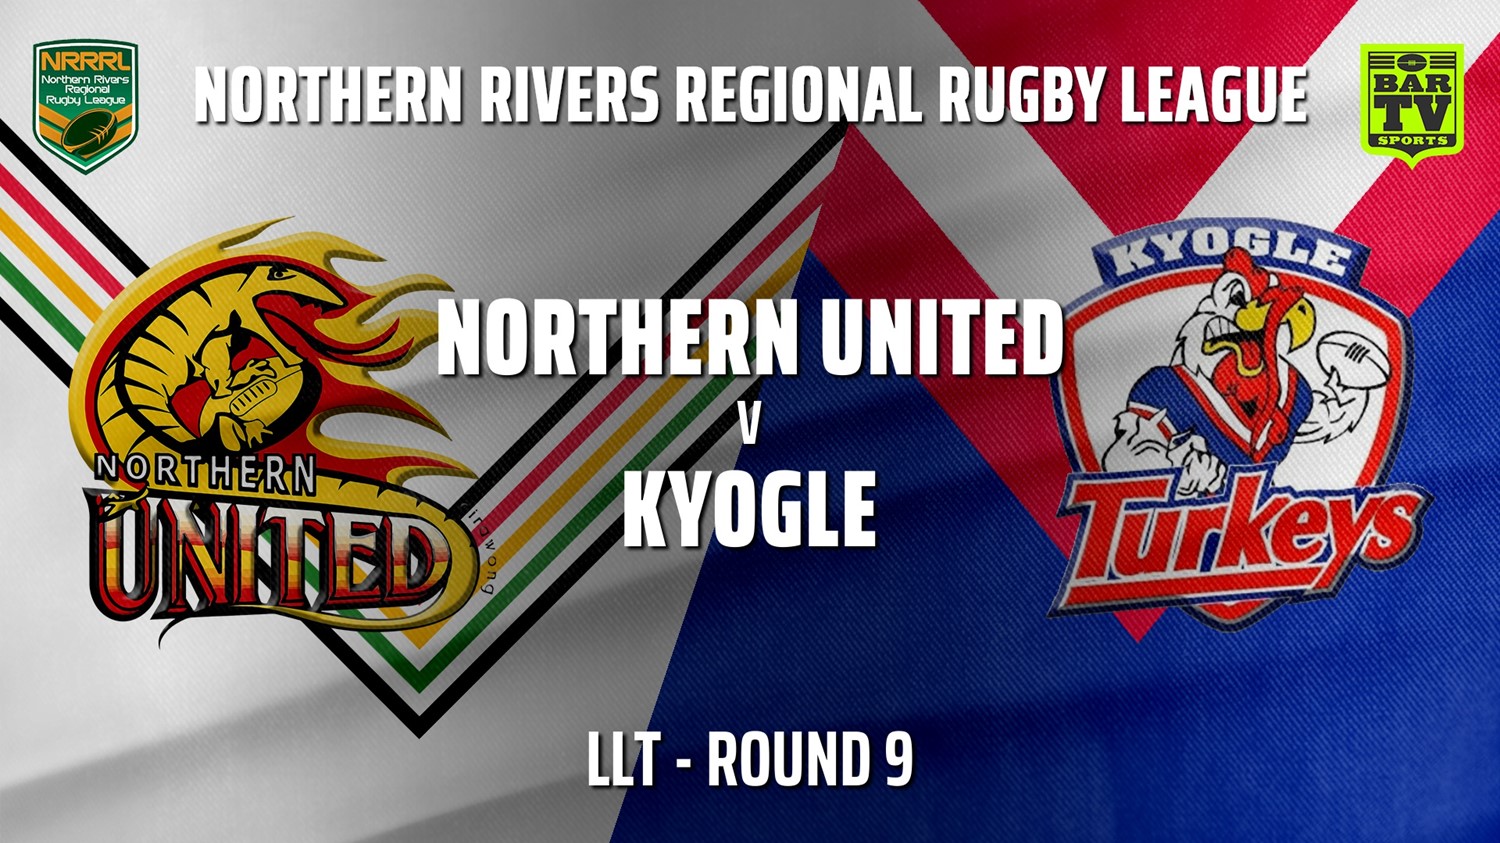 210703-Northern Rivers Round 9 - LLT - Northern United v Kyogle Turkeys Slate Image